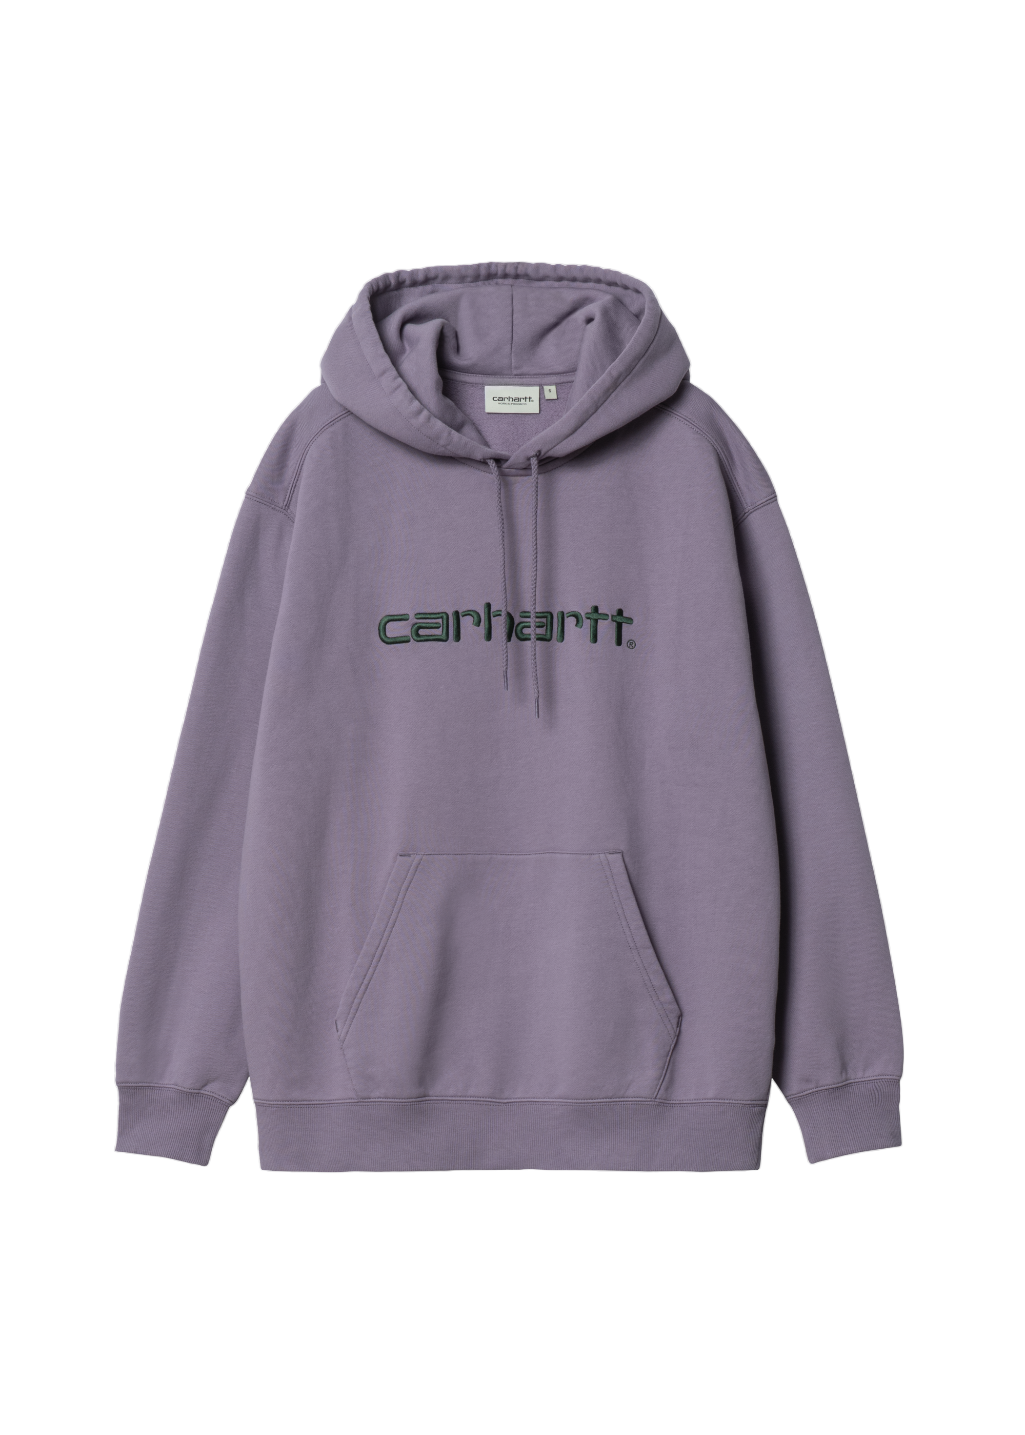 Carhartt WIP - W' Hooded Carhartt Sweatshirt - Glassy Purple/Discovery Green